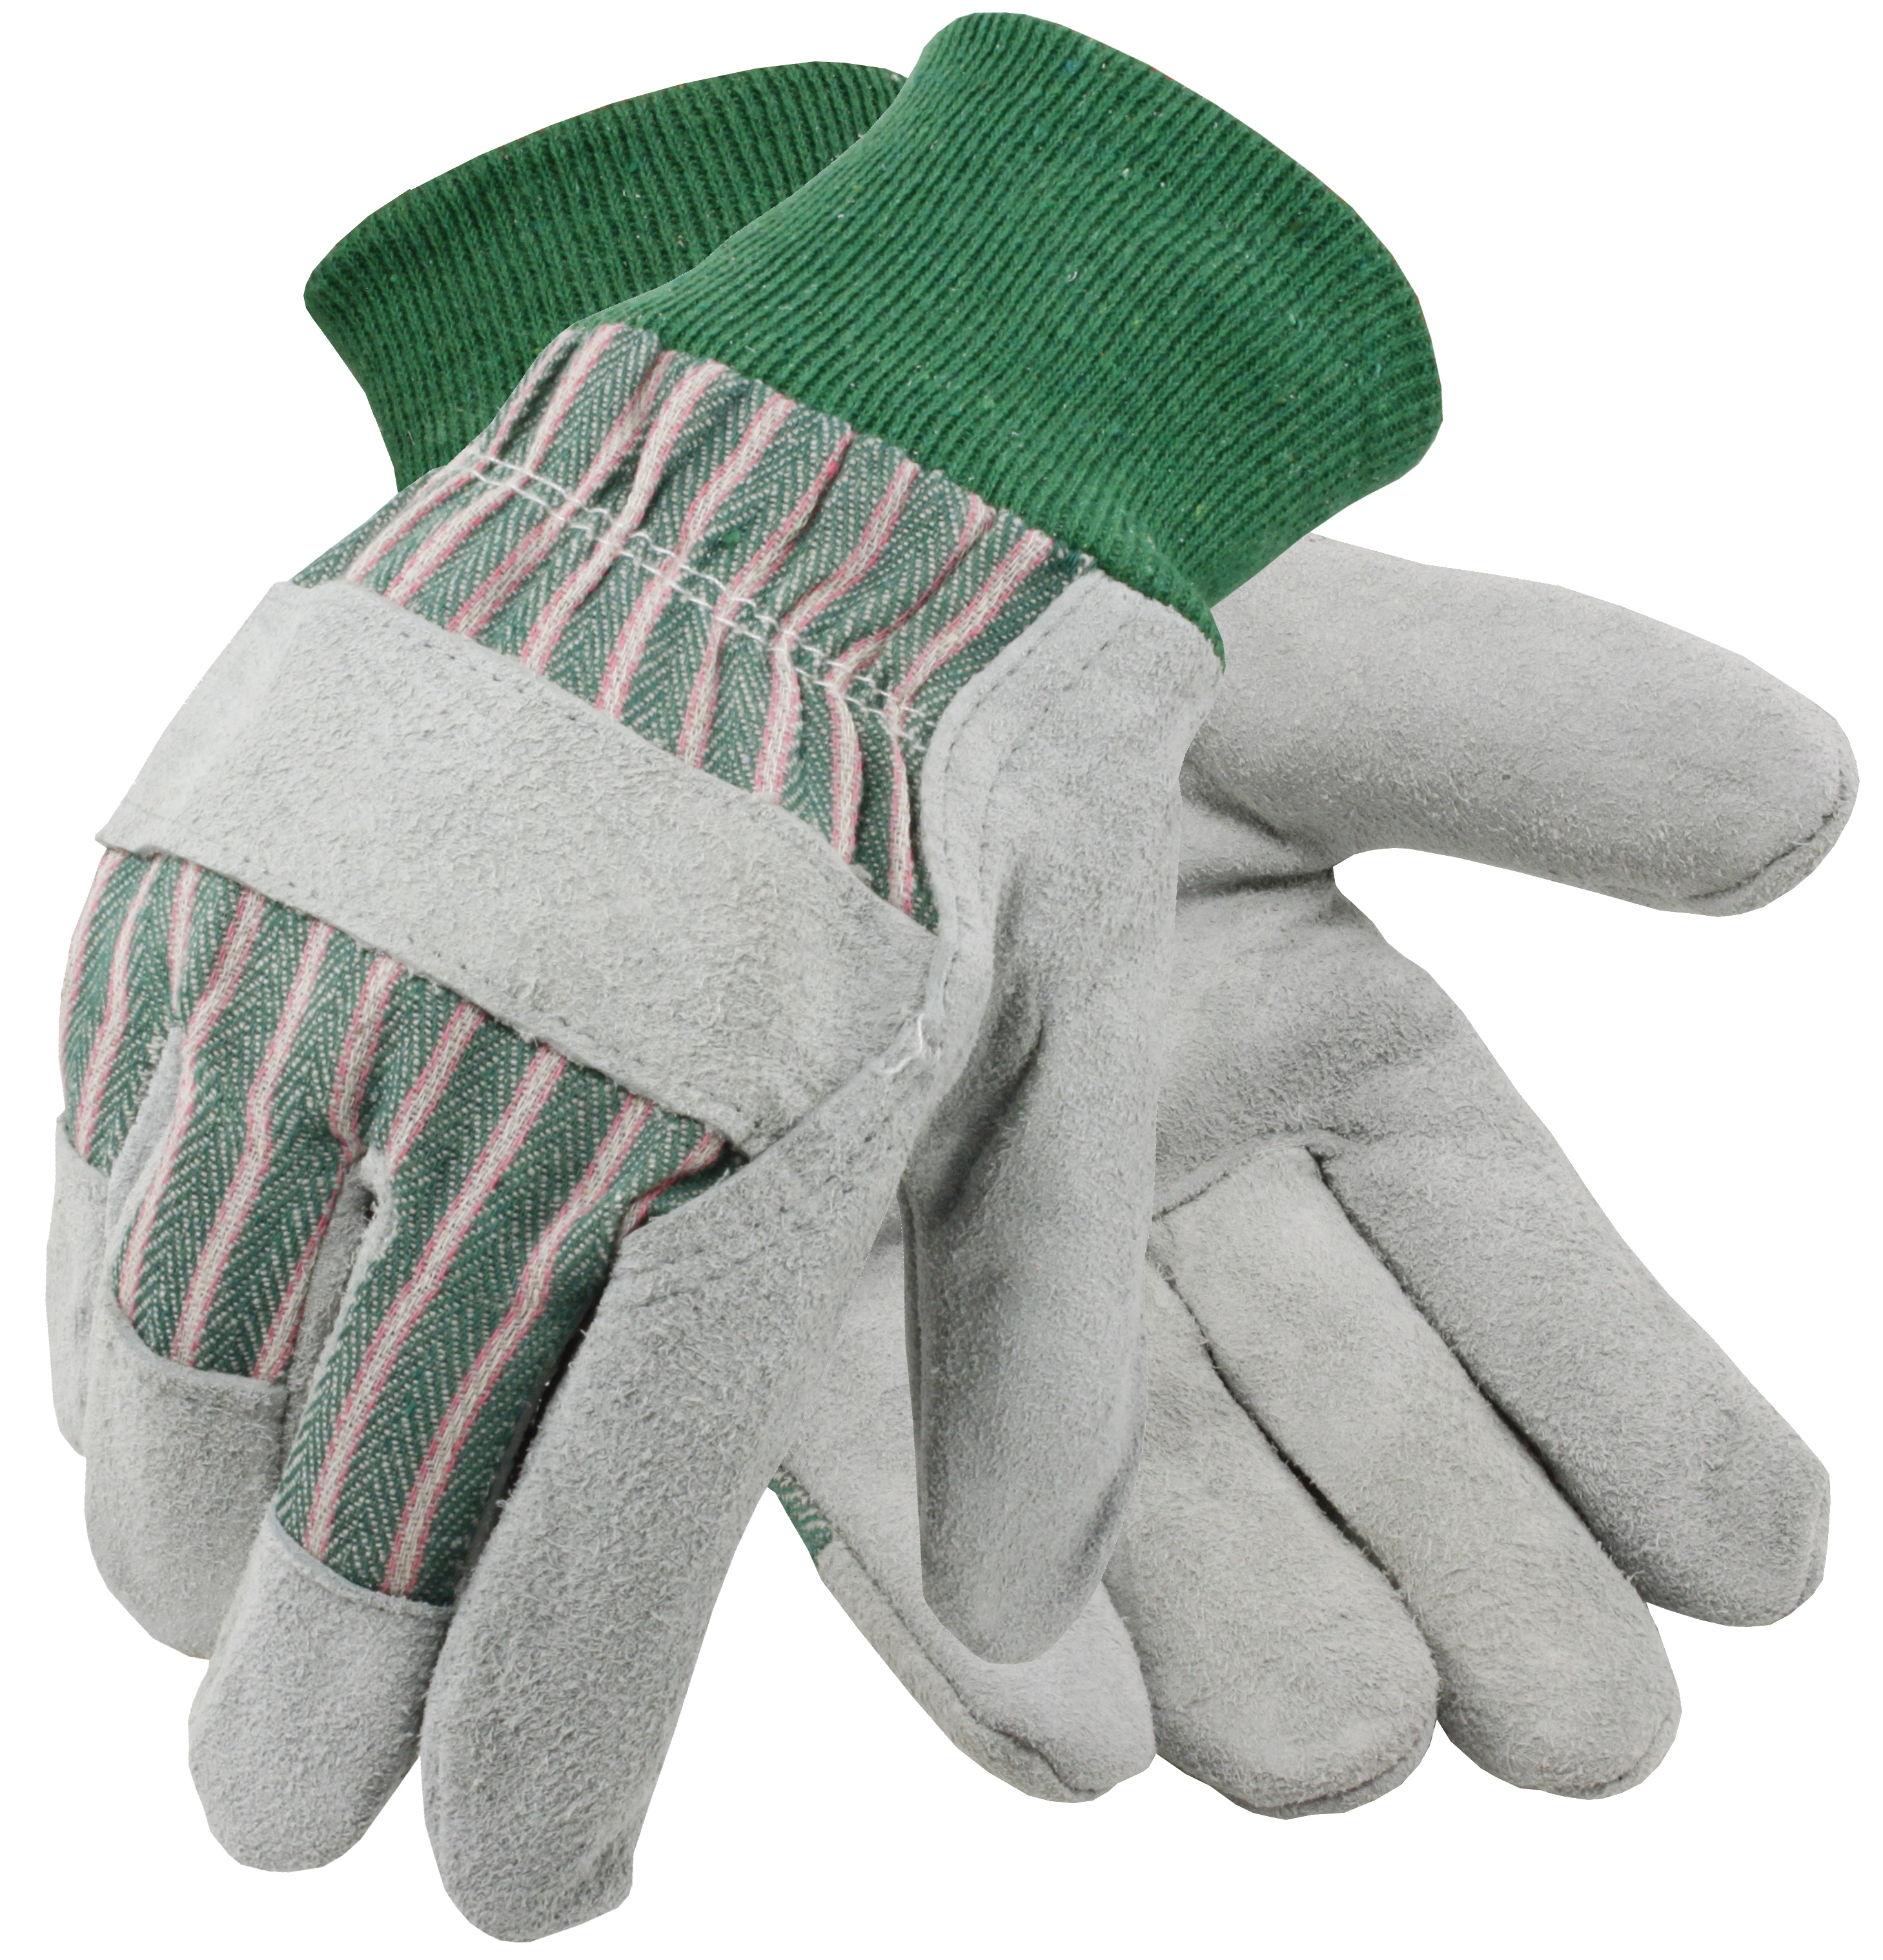 Leather Palm Gloves, Knit Wrist